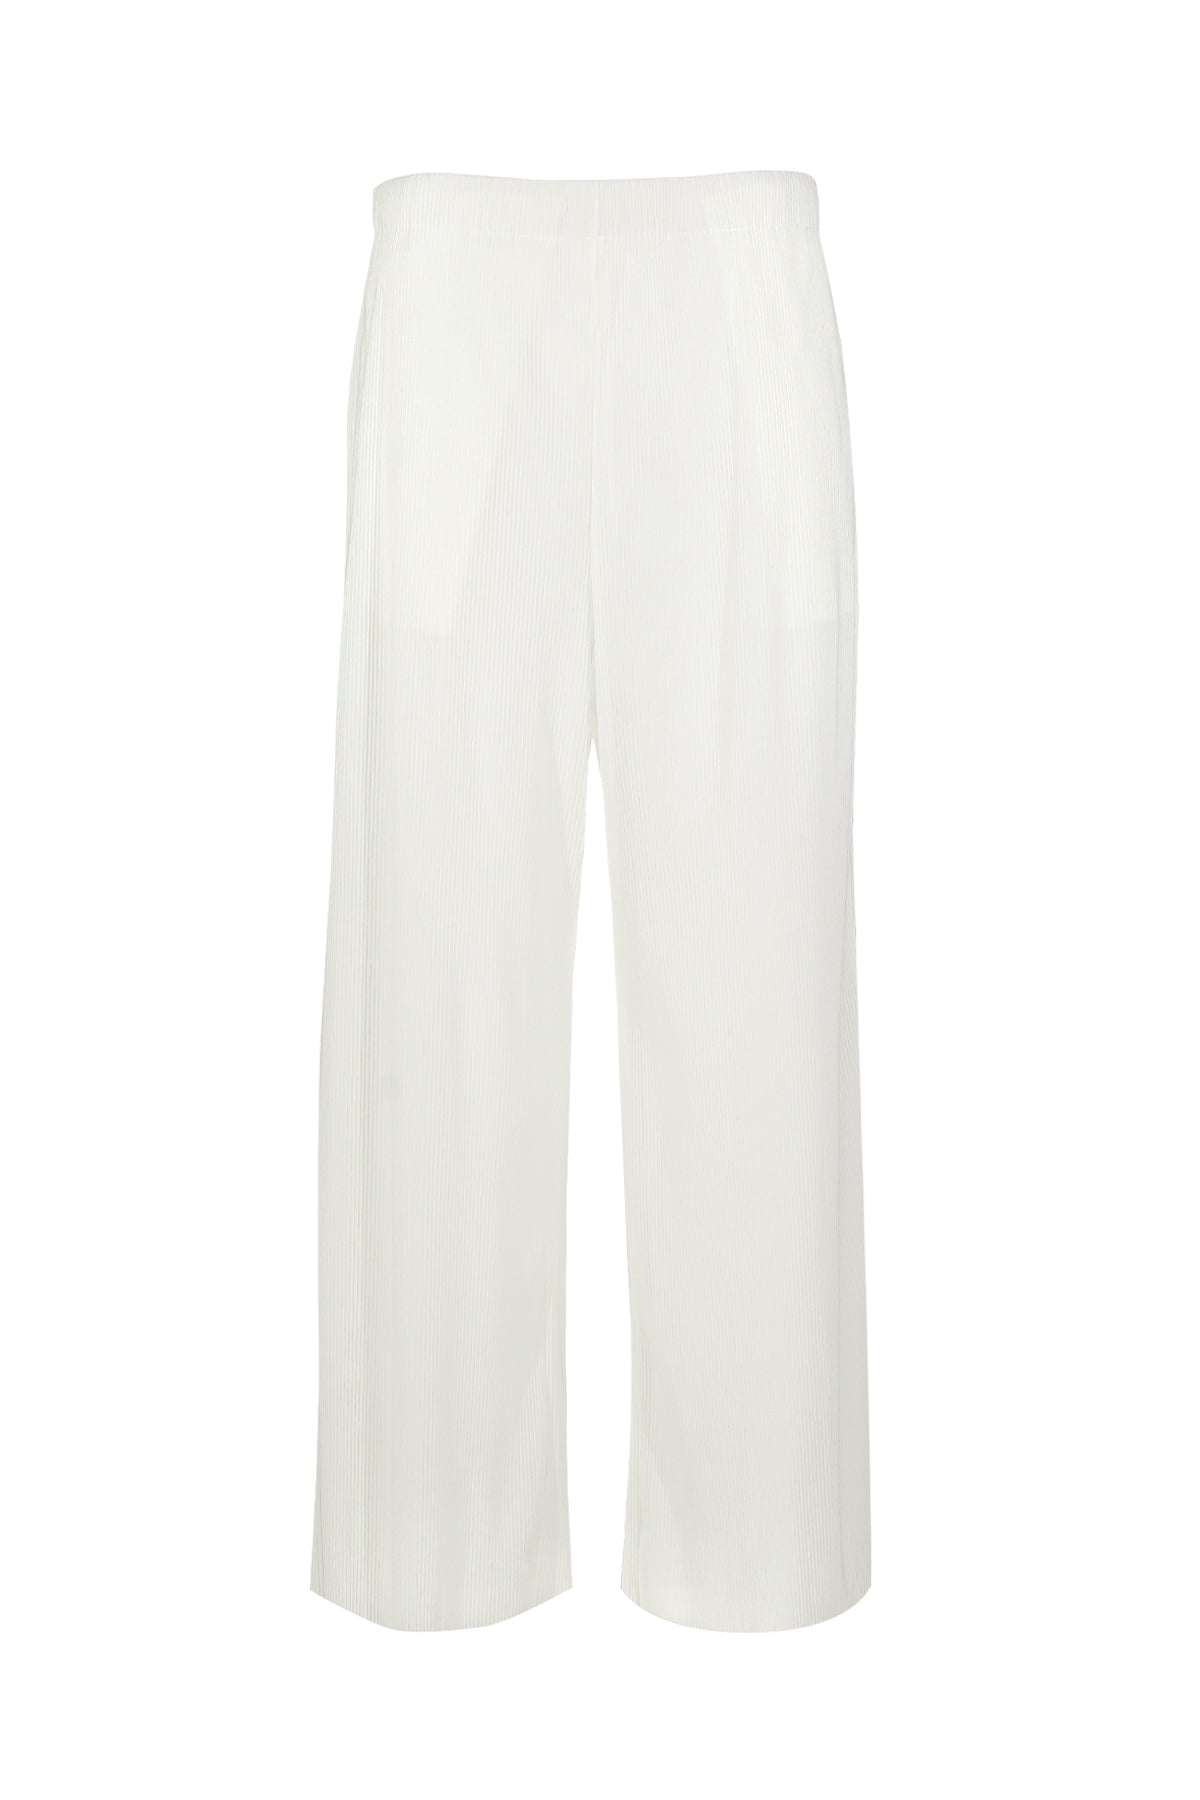 Lea Pleated Pants - White